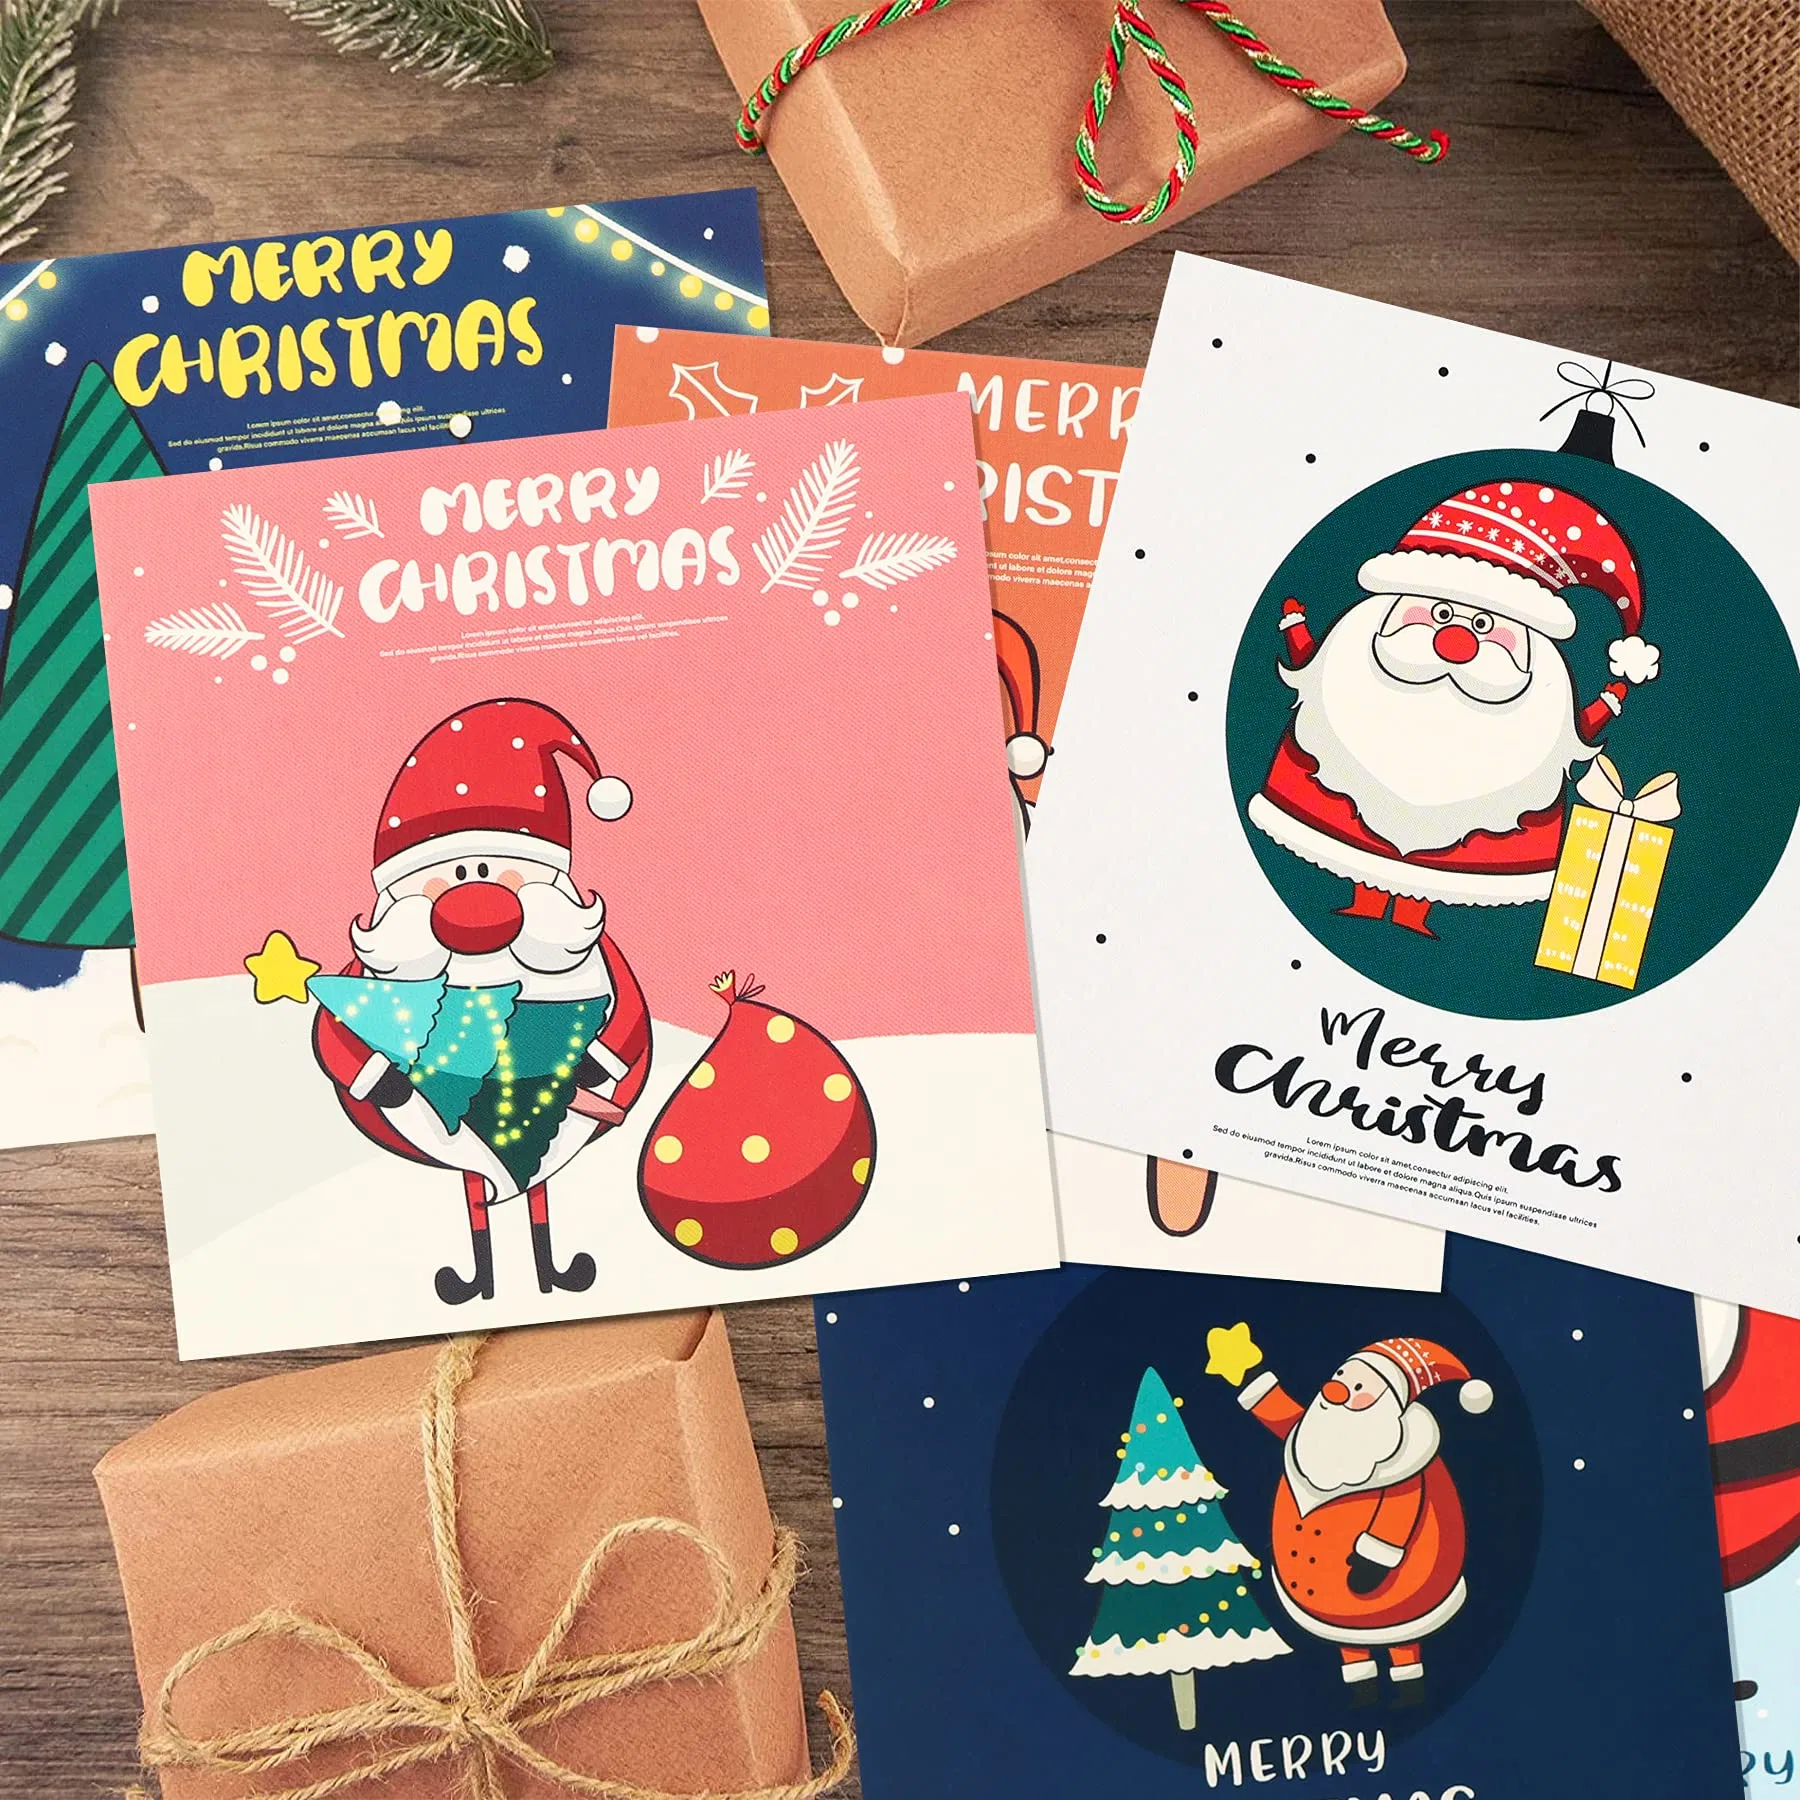 Cartoon Christmas Cards New Year Gift Blessing Greeting Envelope Xmas Greeting Cards Postcards Tarjeta De Navidad